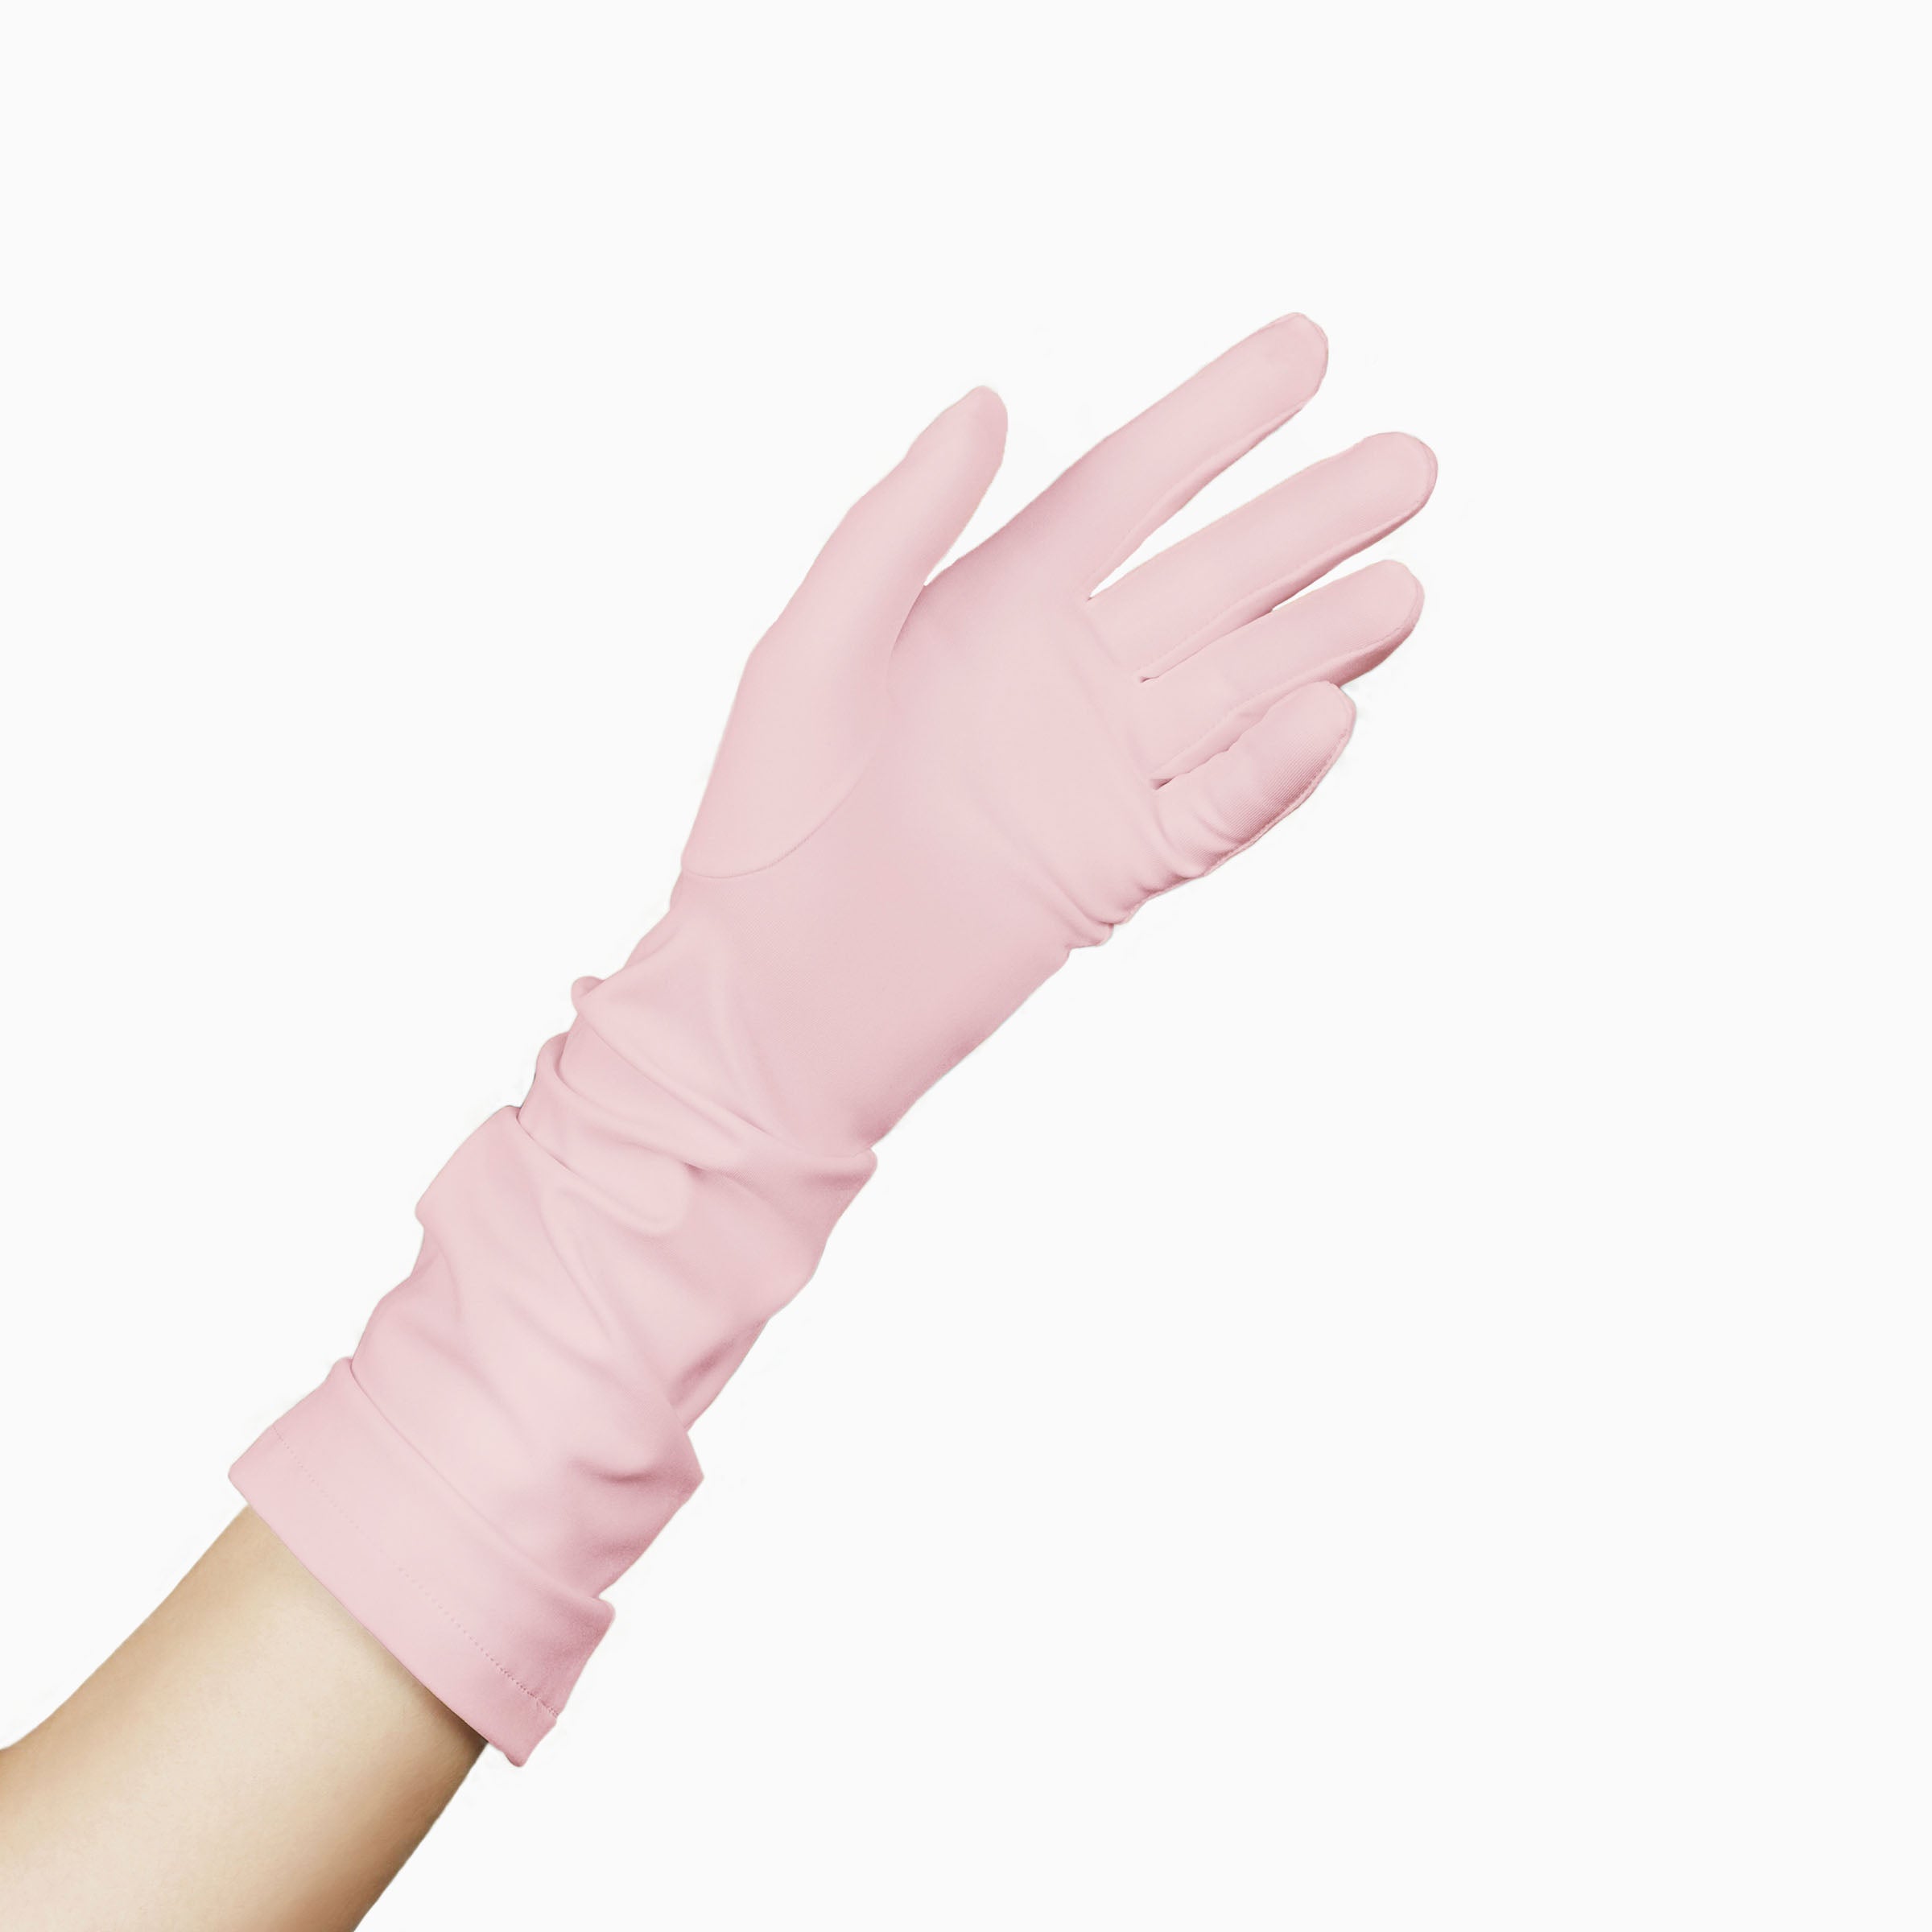 Pink THE JILL glove by Ladyfinch.